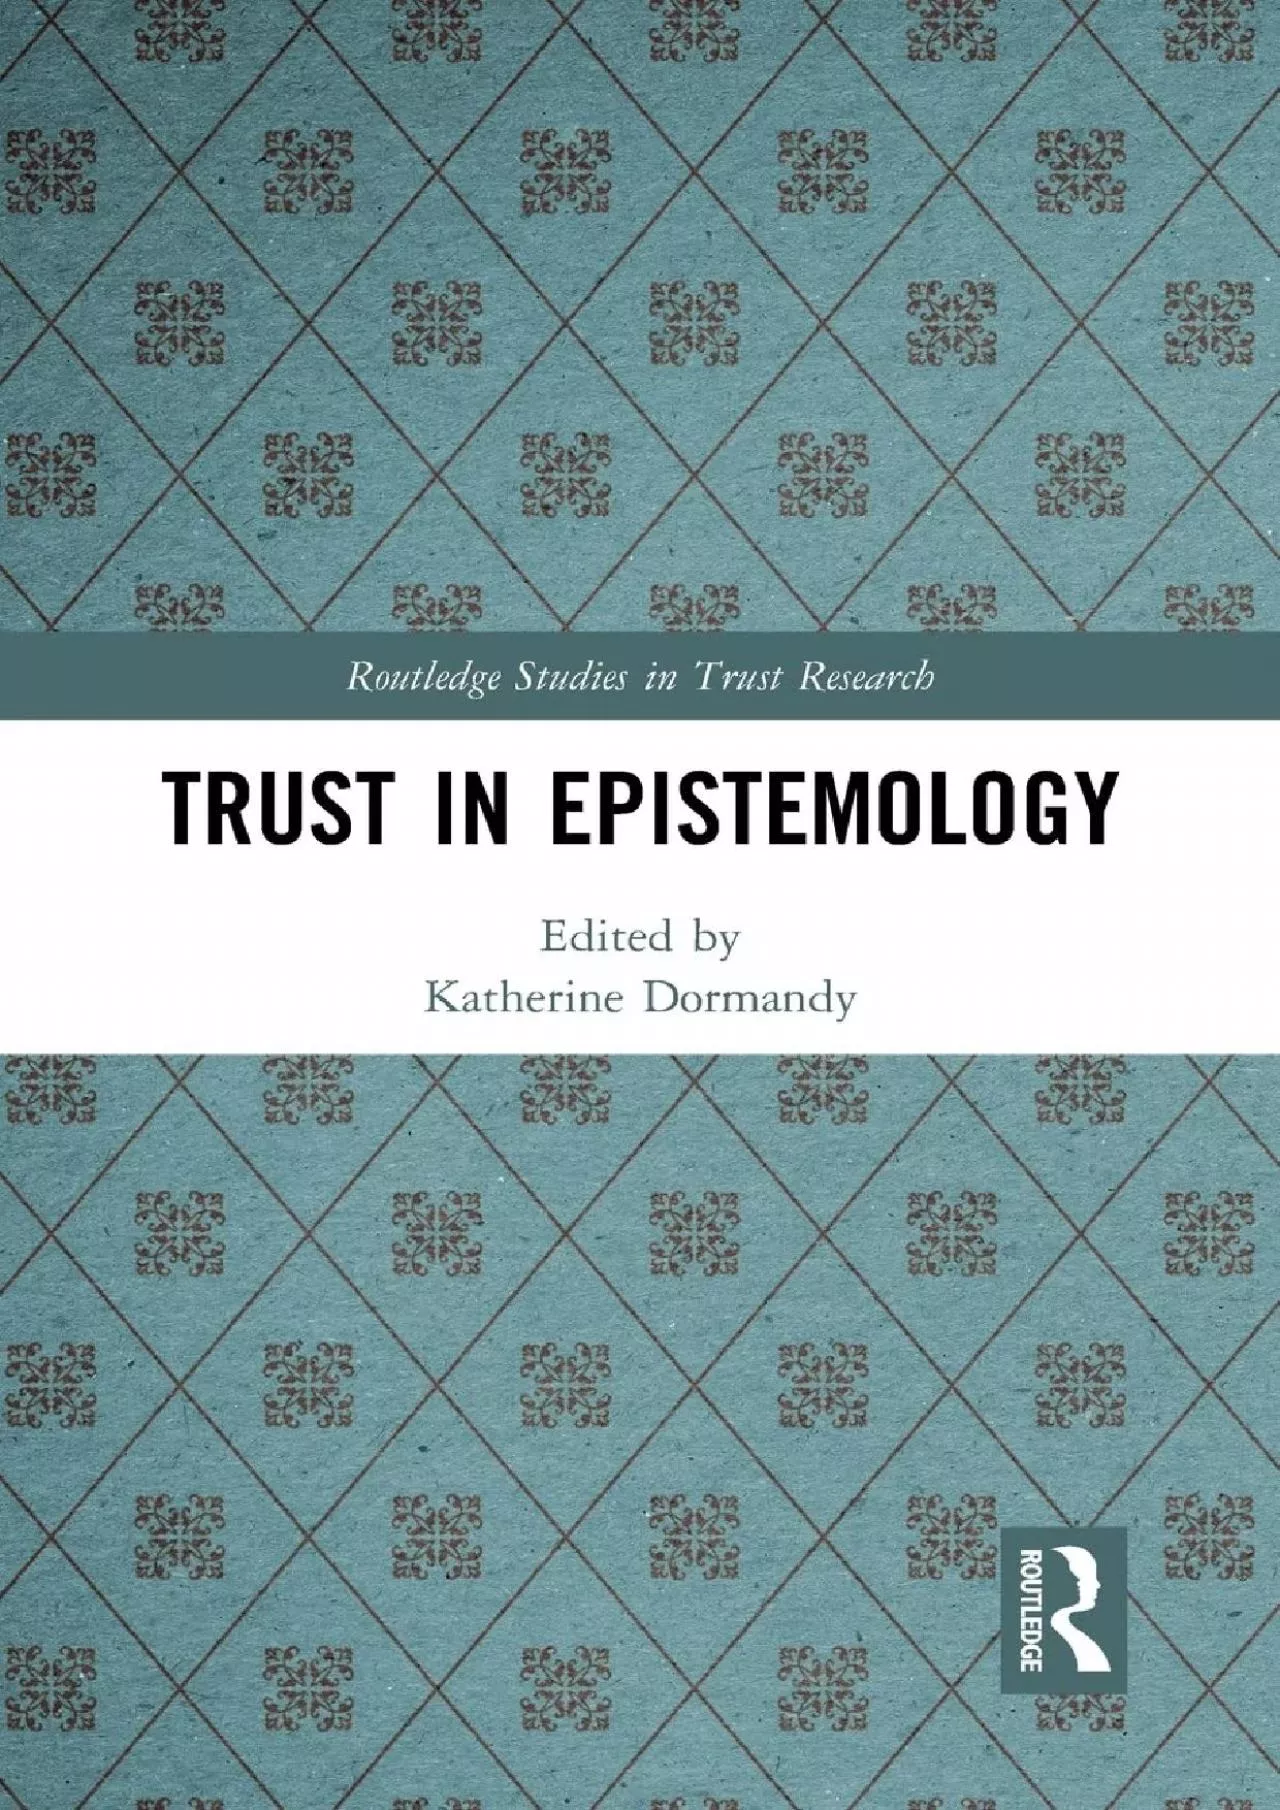 (DOWNLOAD)-Trust in Epistemology (Routledge Studies in Trust Research)